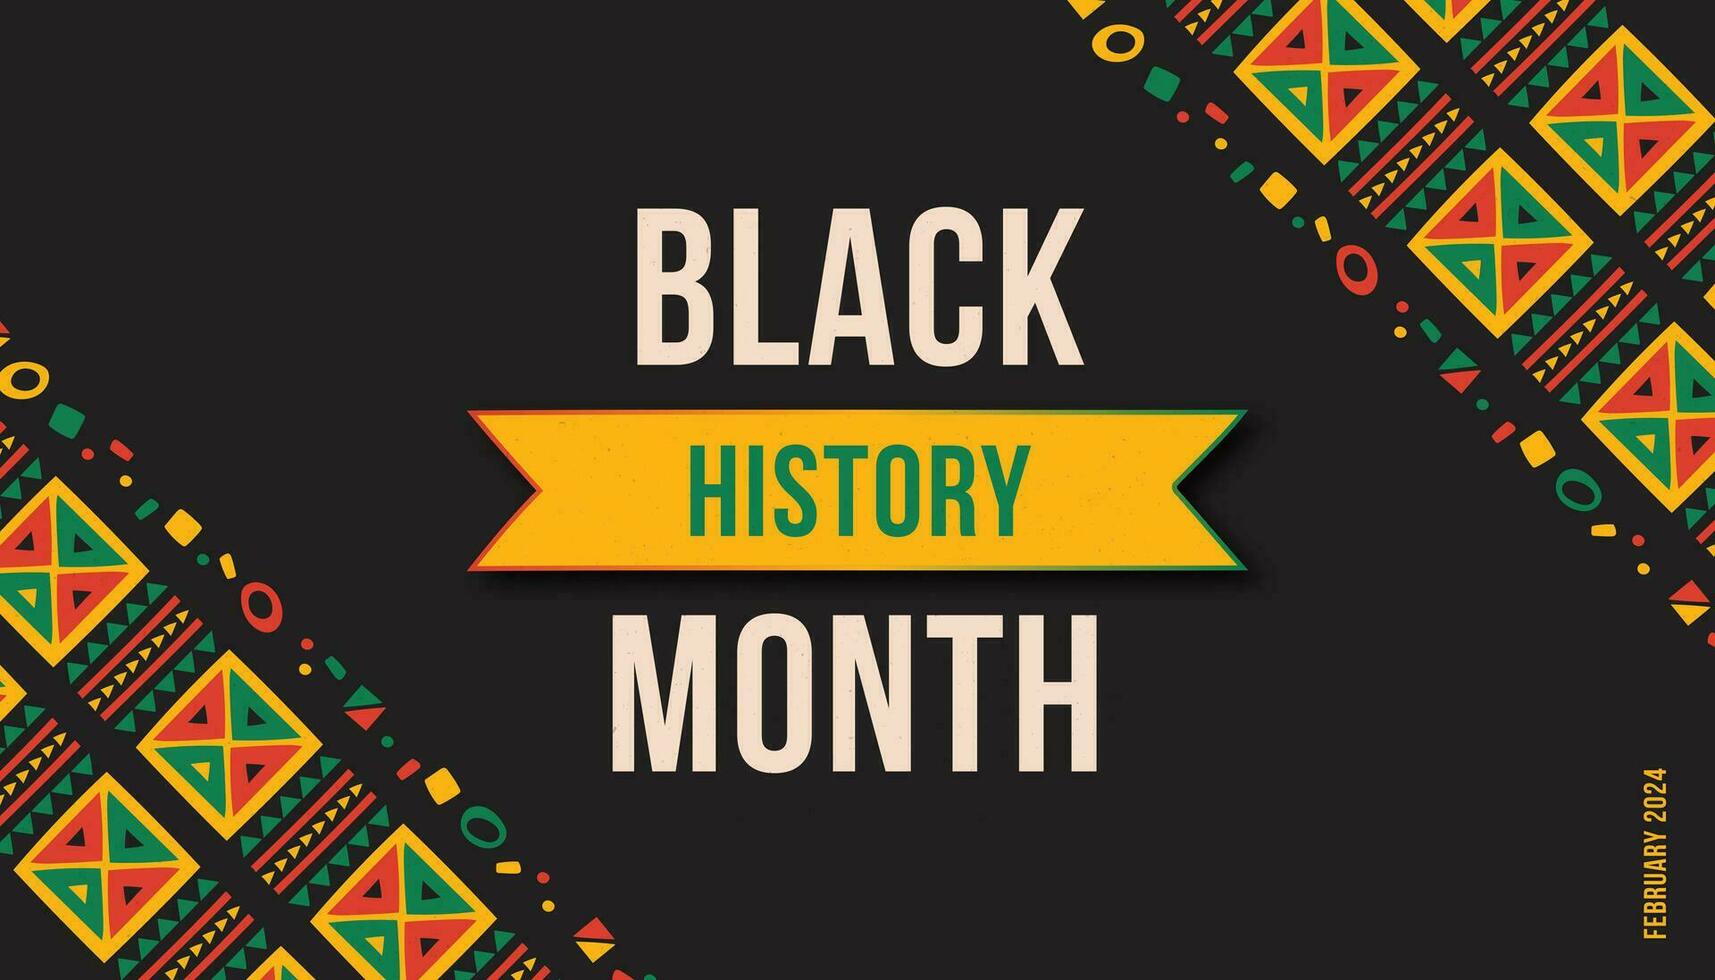 Black history month celebrate. illustration graphic Black history month vector